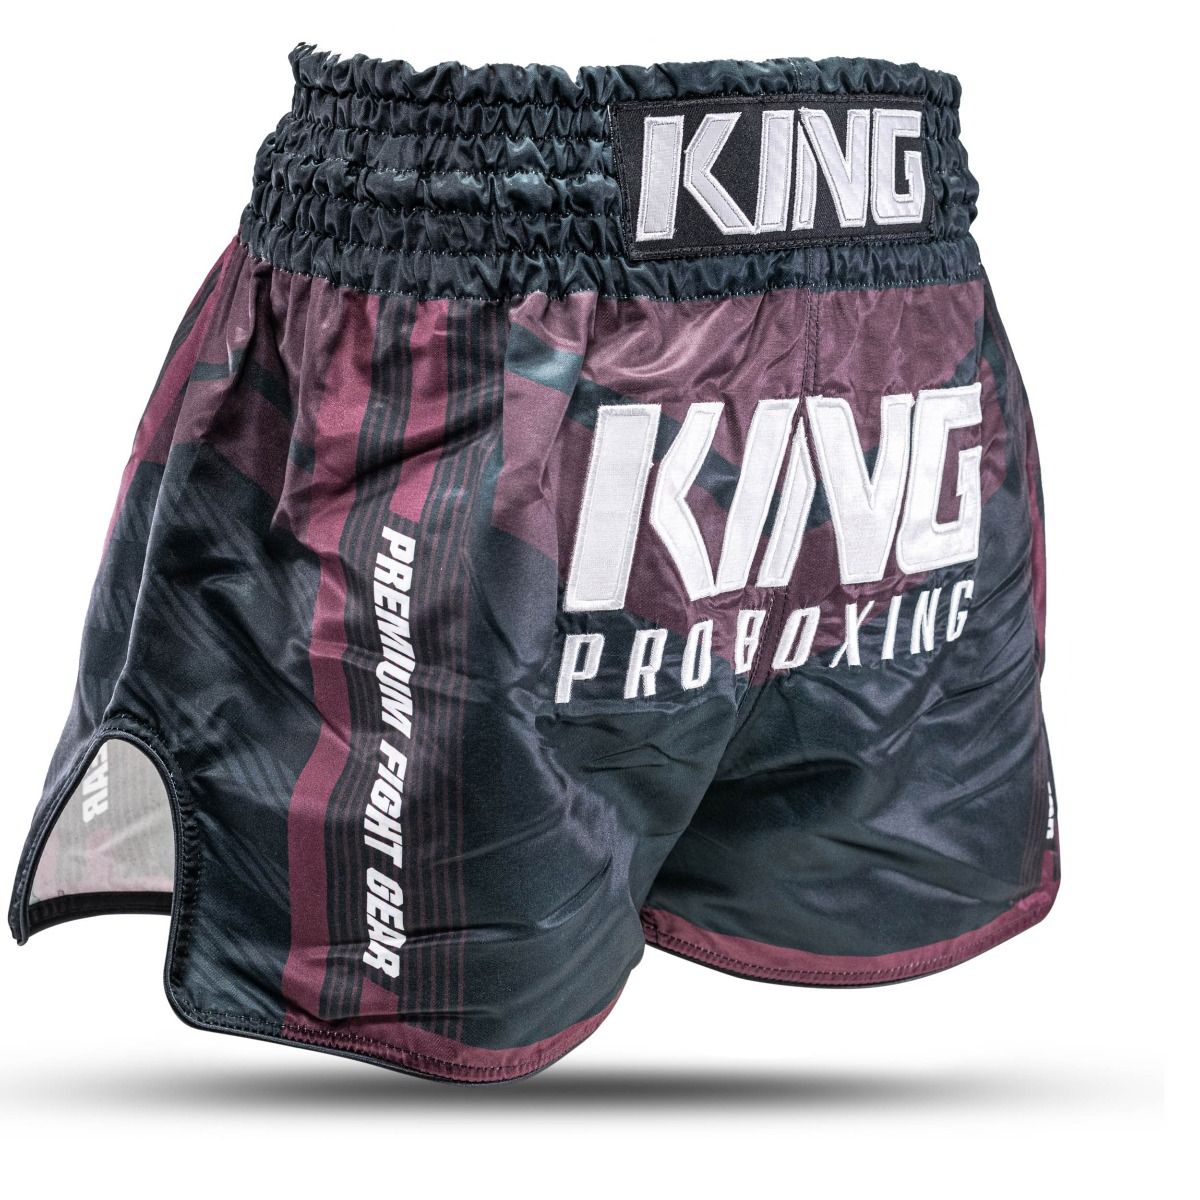 King Pro Boxing - Fightshort - ENDURANCE 1 - boudreaux rood - zwart - red - black